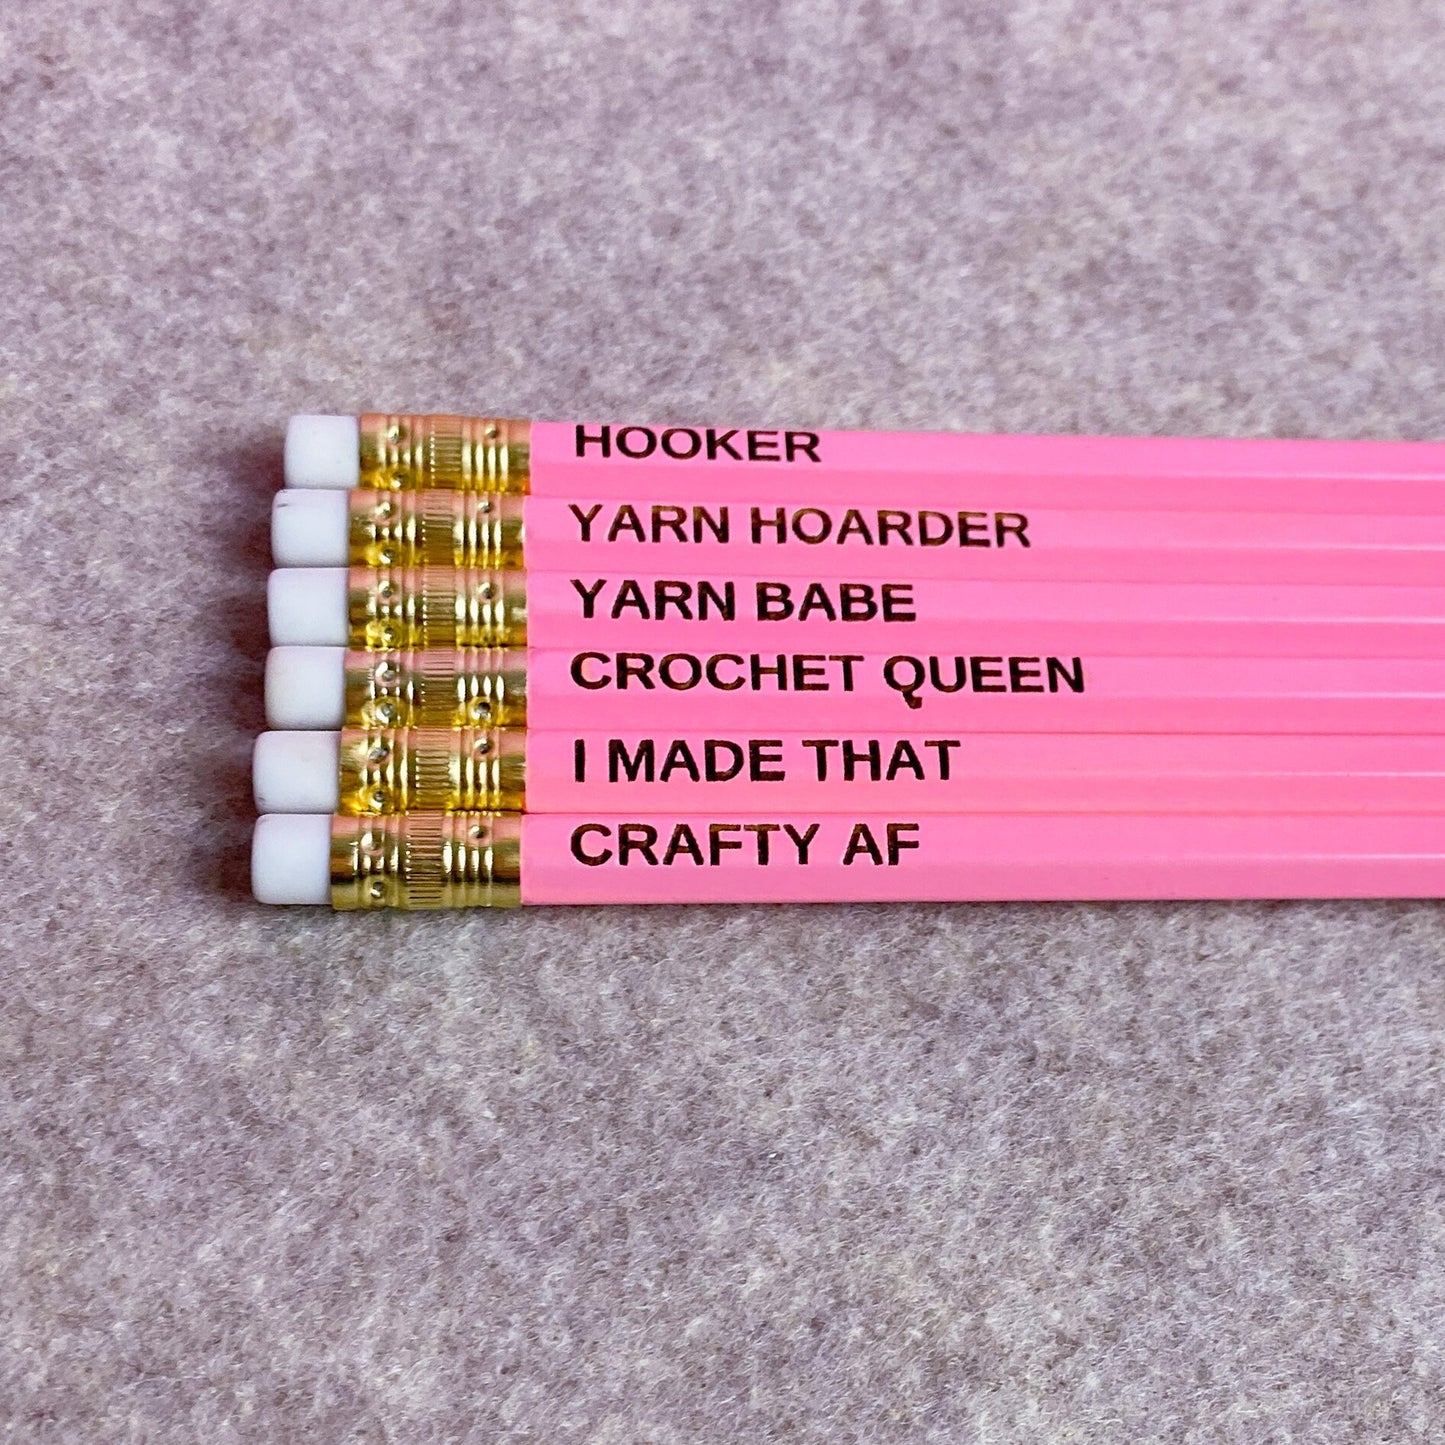 Crafty Saying Pencil Set